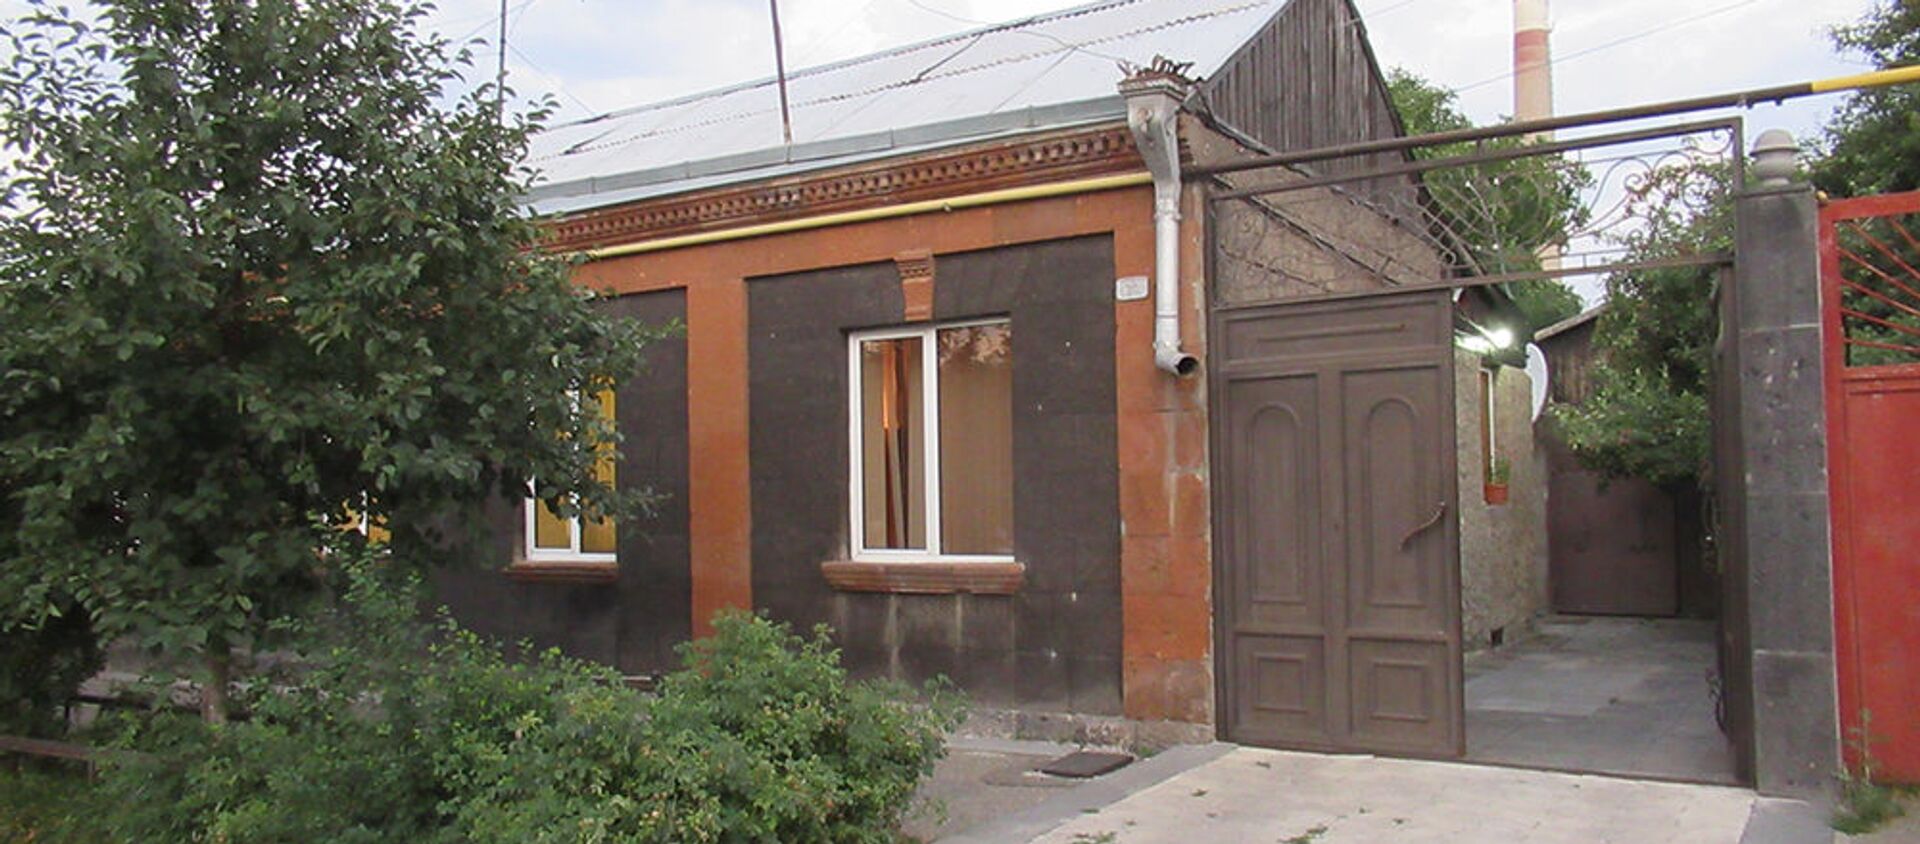 Доме на улице Пароняна в Гюмри - Sputnik Армения, 1920, 21.07.2021